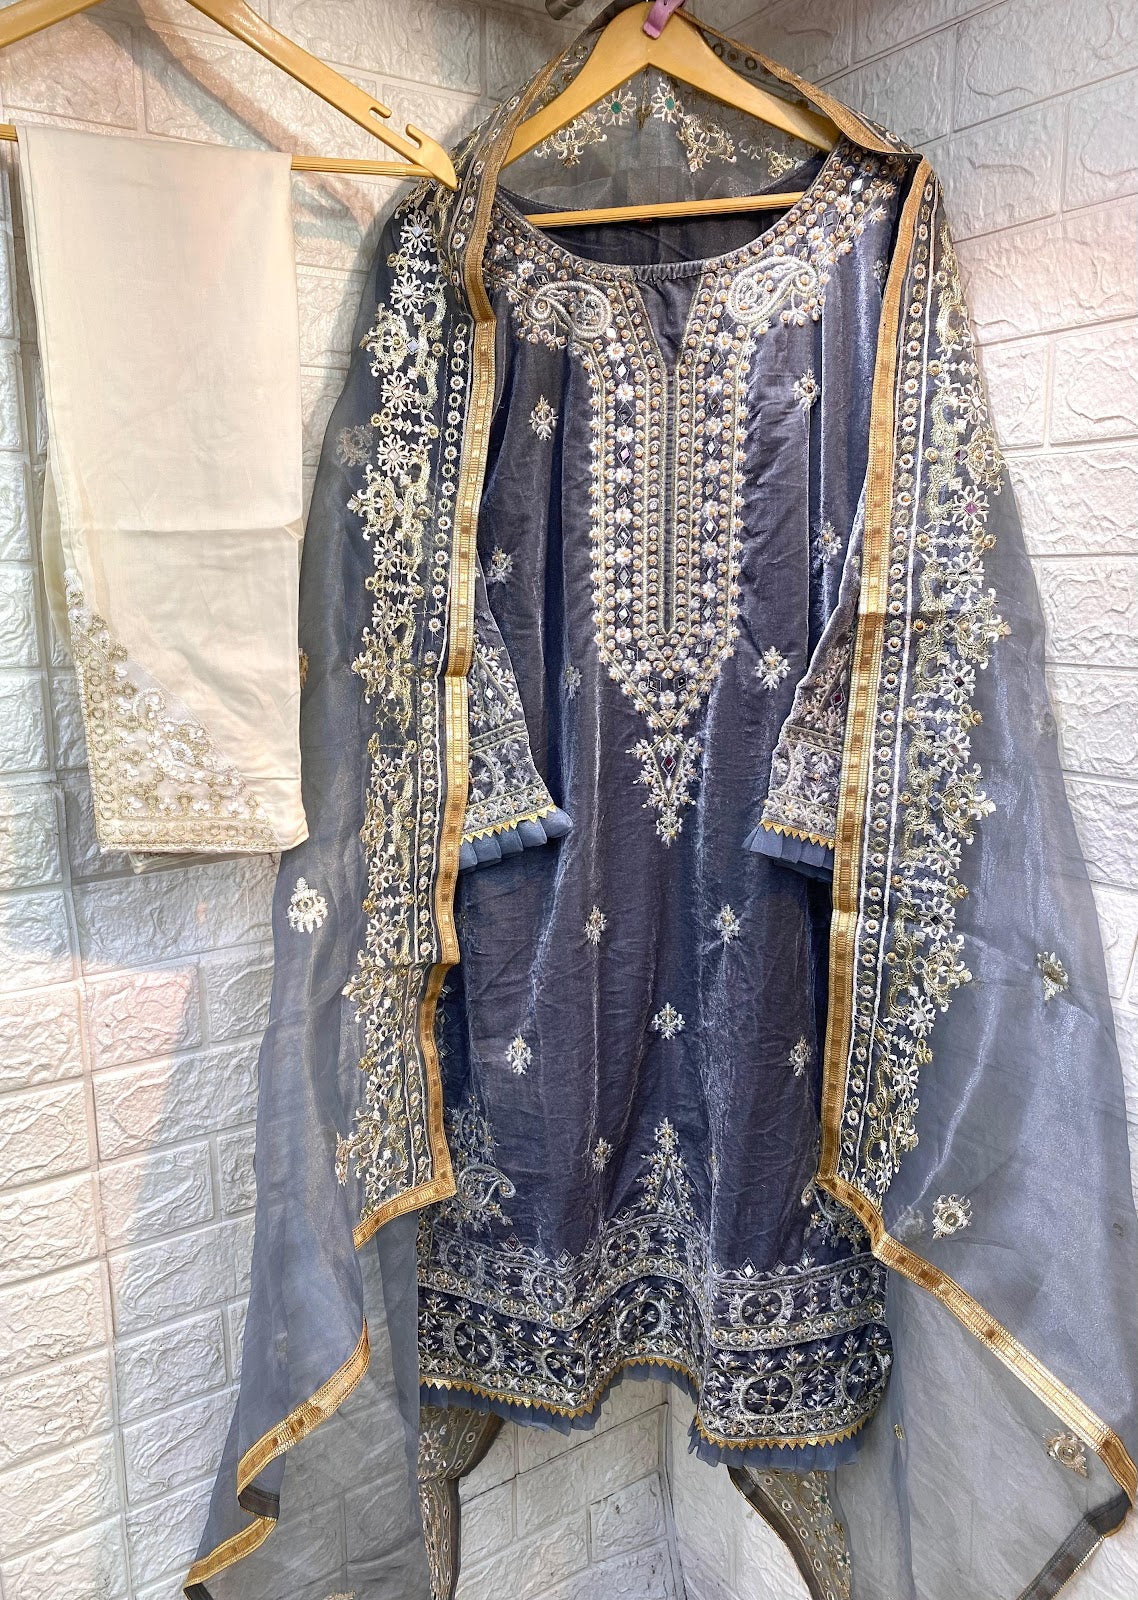 56097 Asim Jofa Readymade Velvet Suits